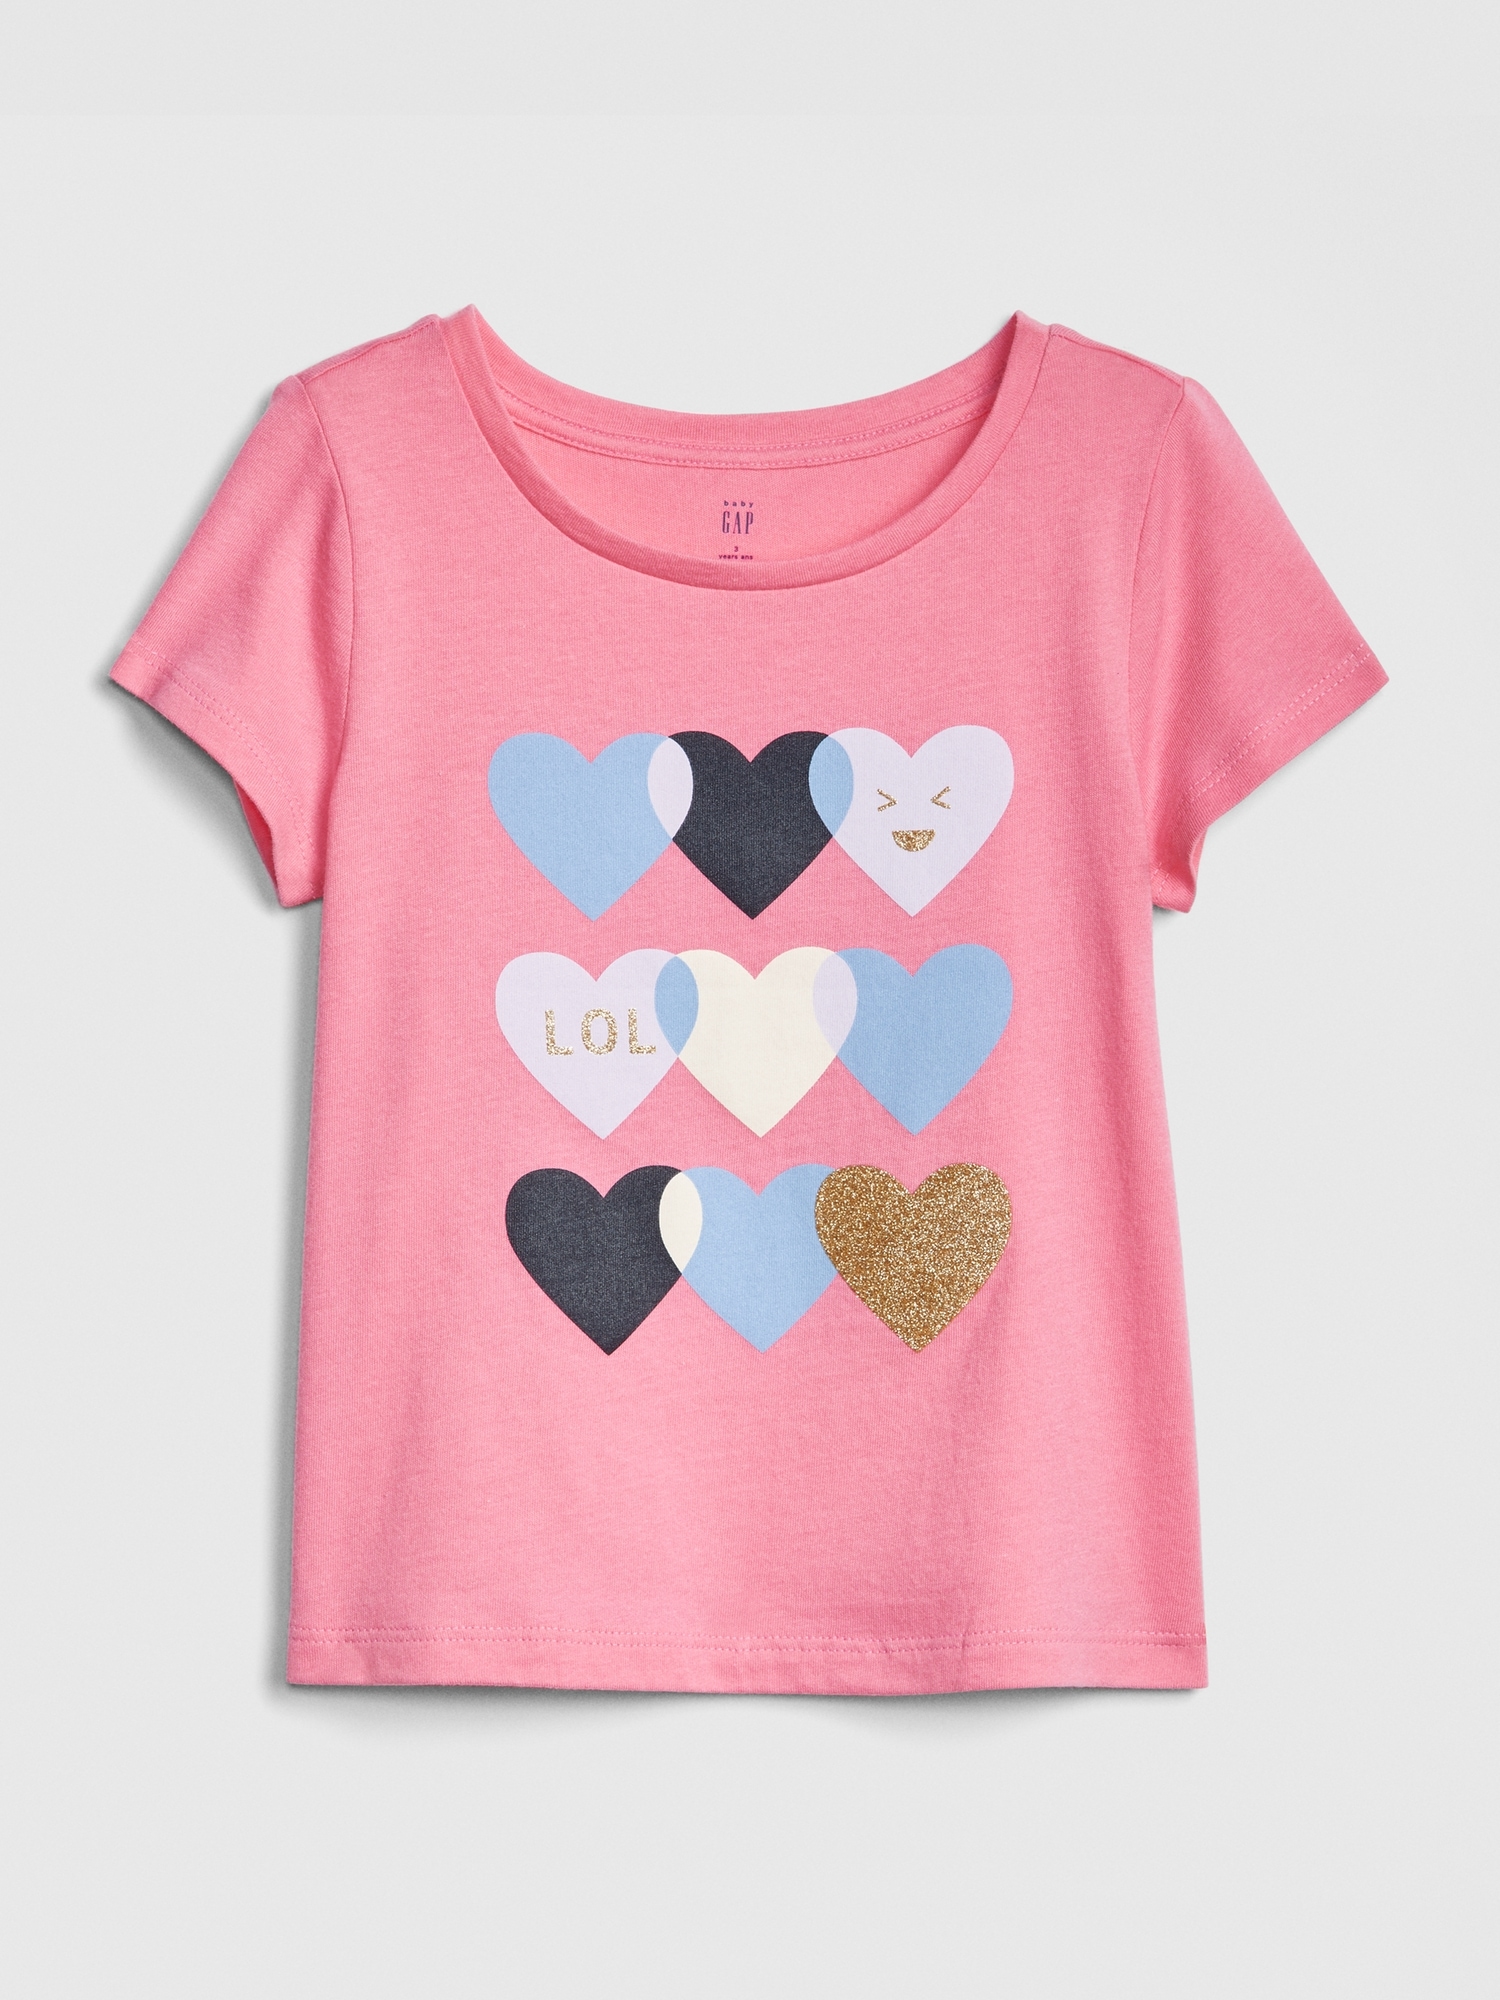 Toddler Graphic Short Sleeve T-Shirt | Gap